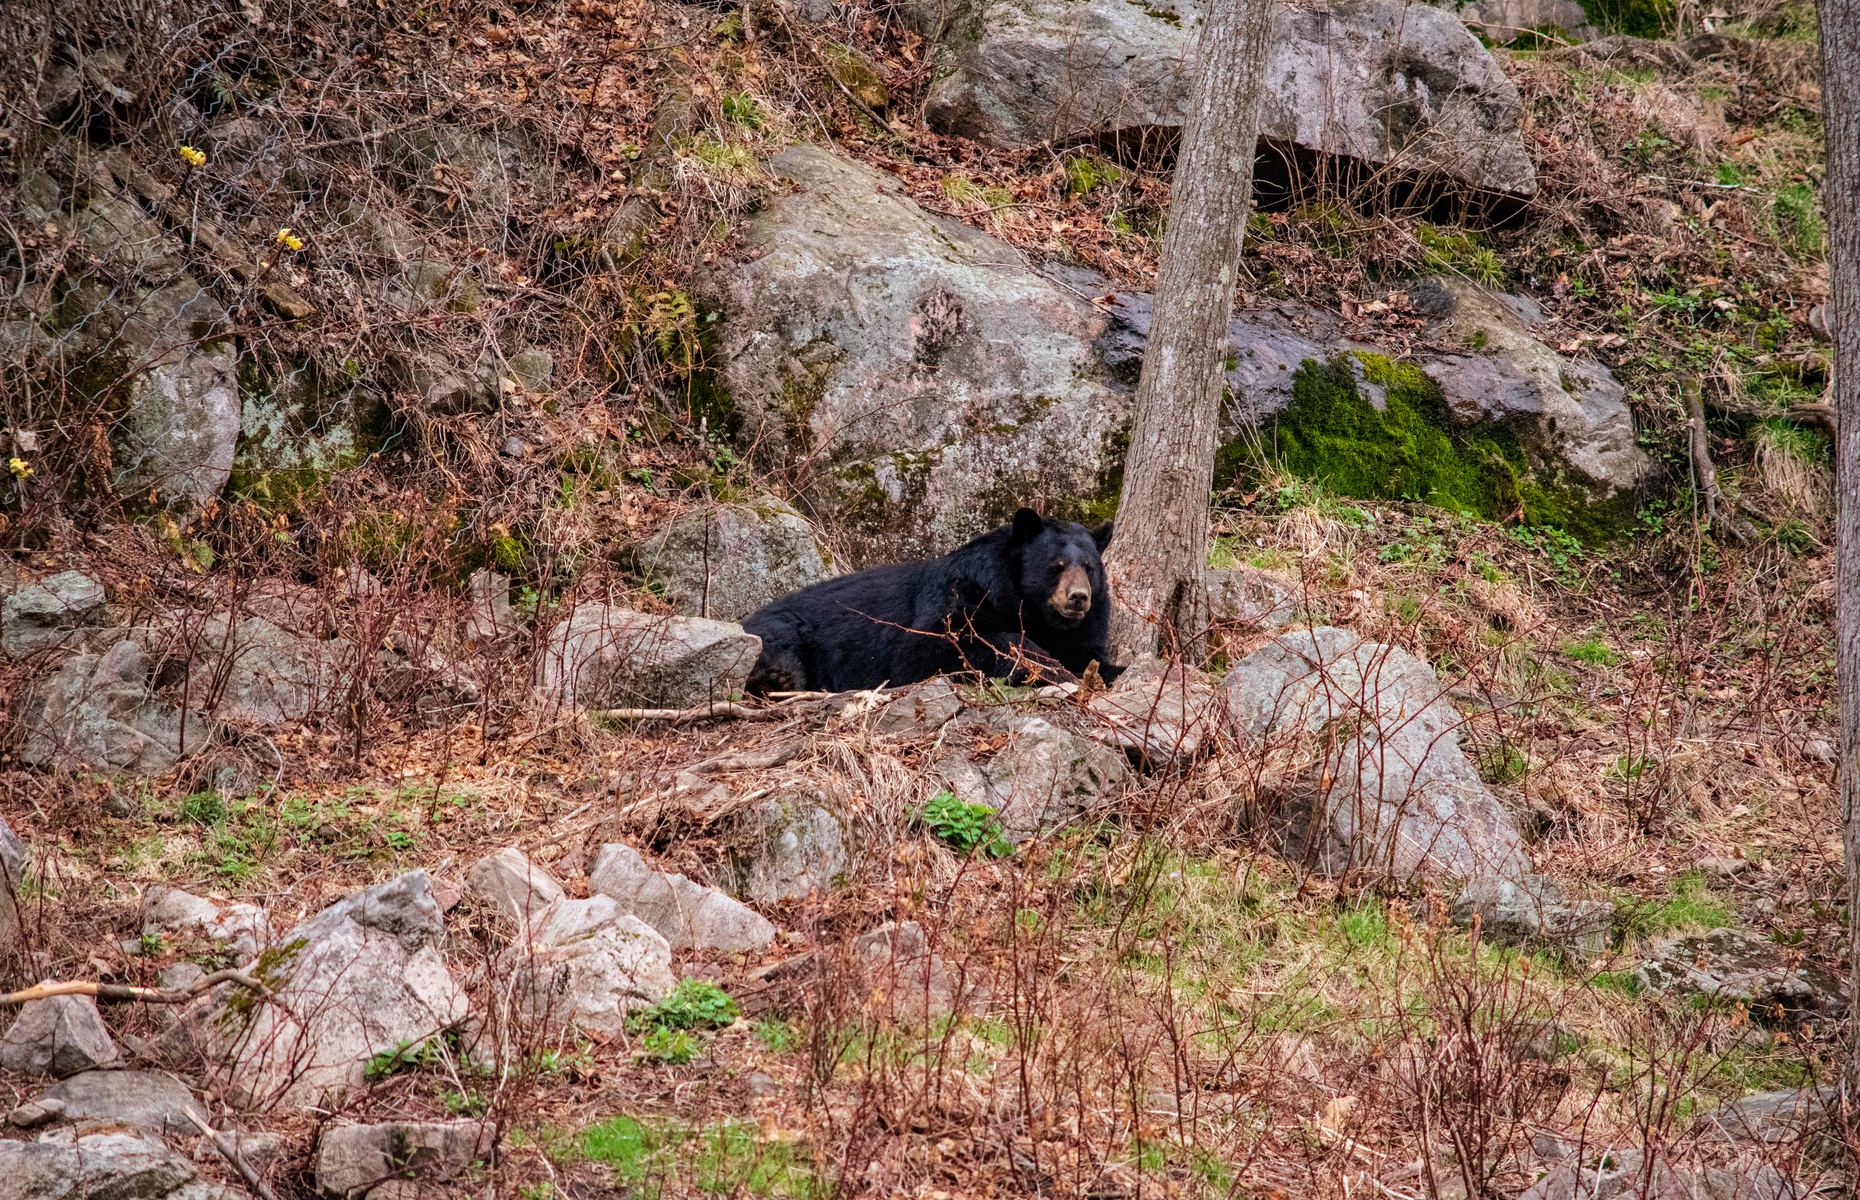 Black bear (Image: Coco-rentin/Shutterstock)